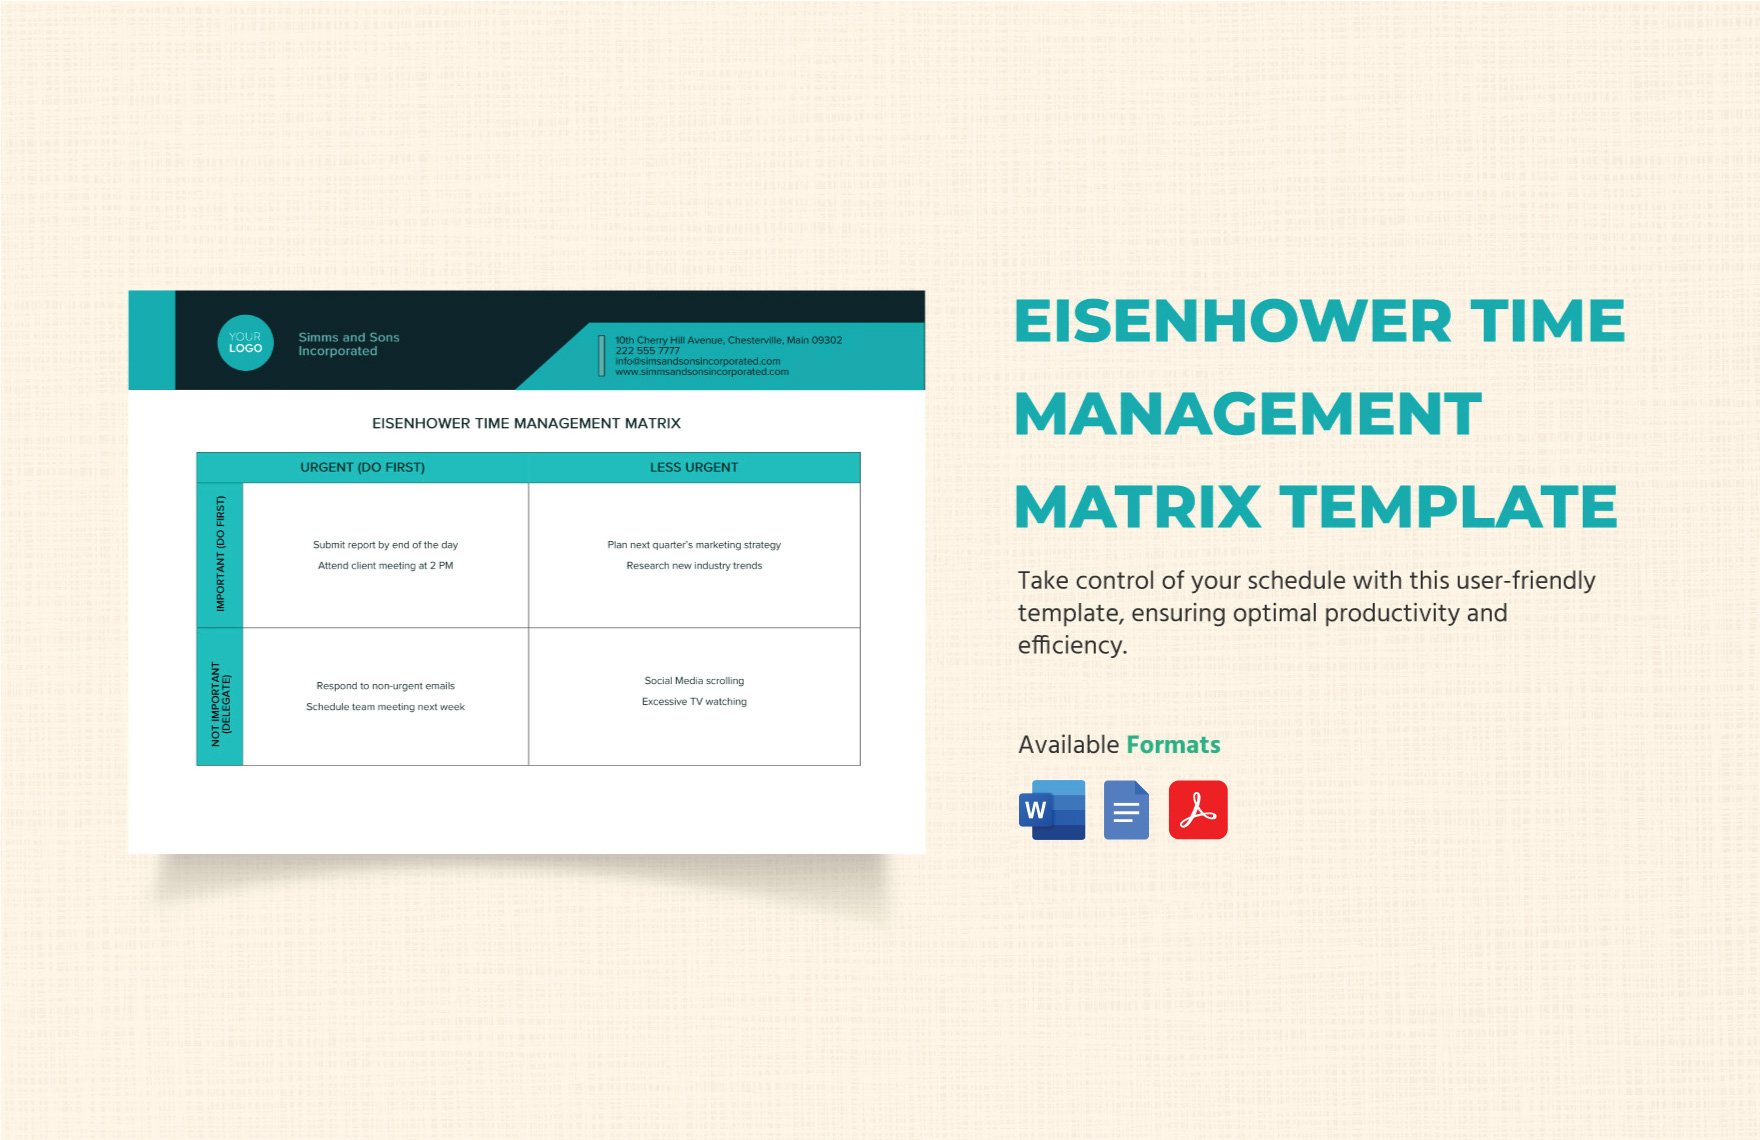 Eisenhower Time Management Matrix Template